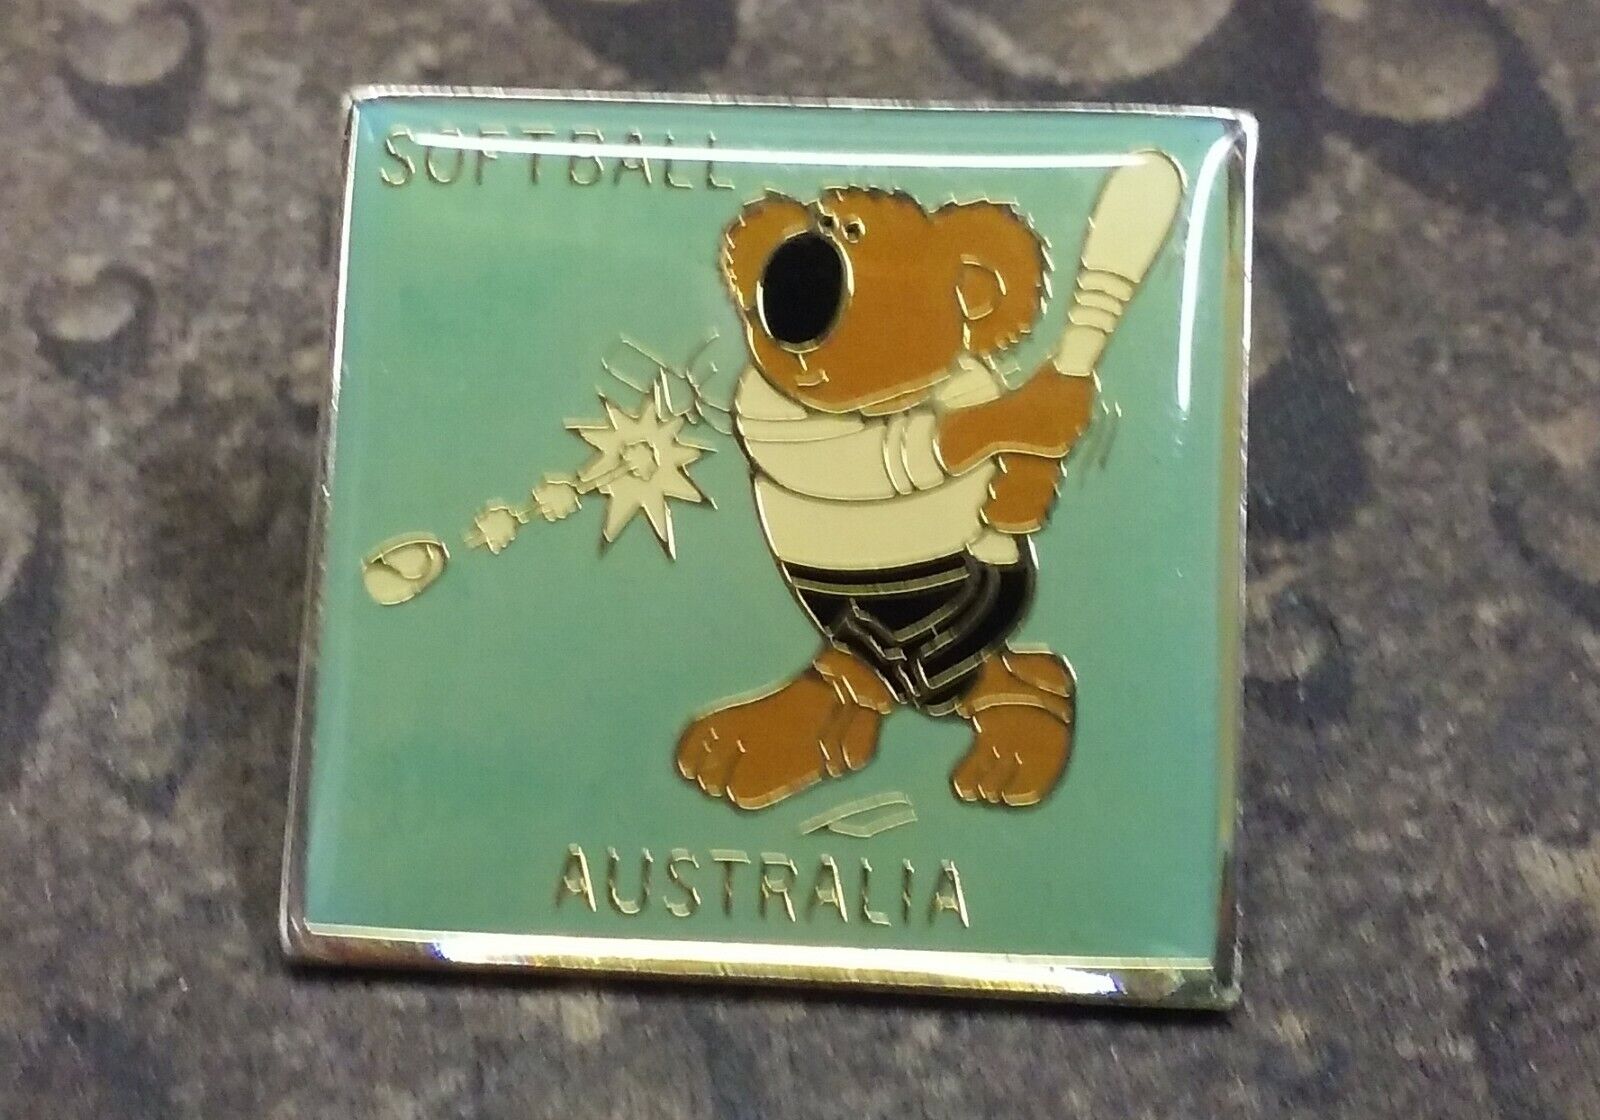 Australia Softball Batter vintage pin badge 